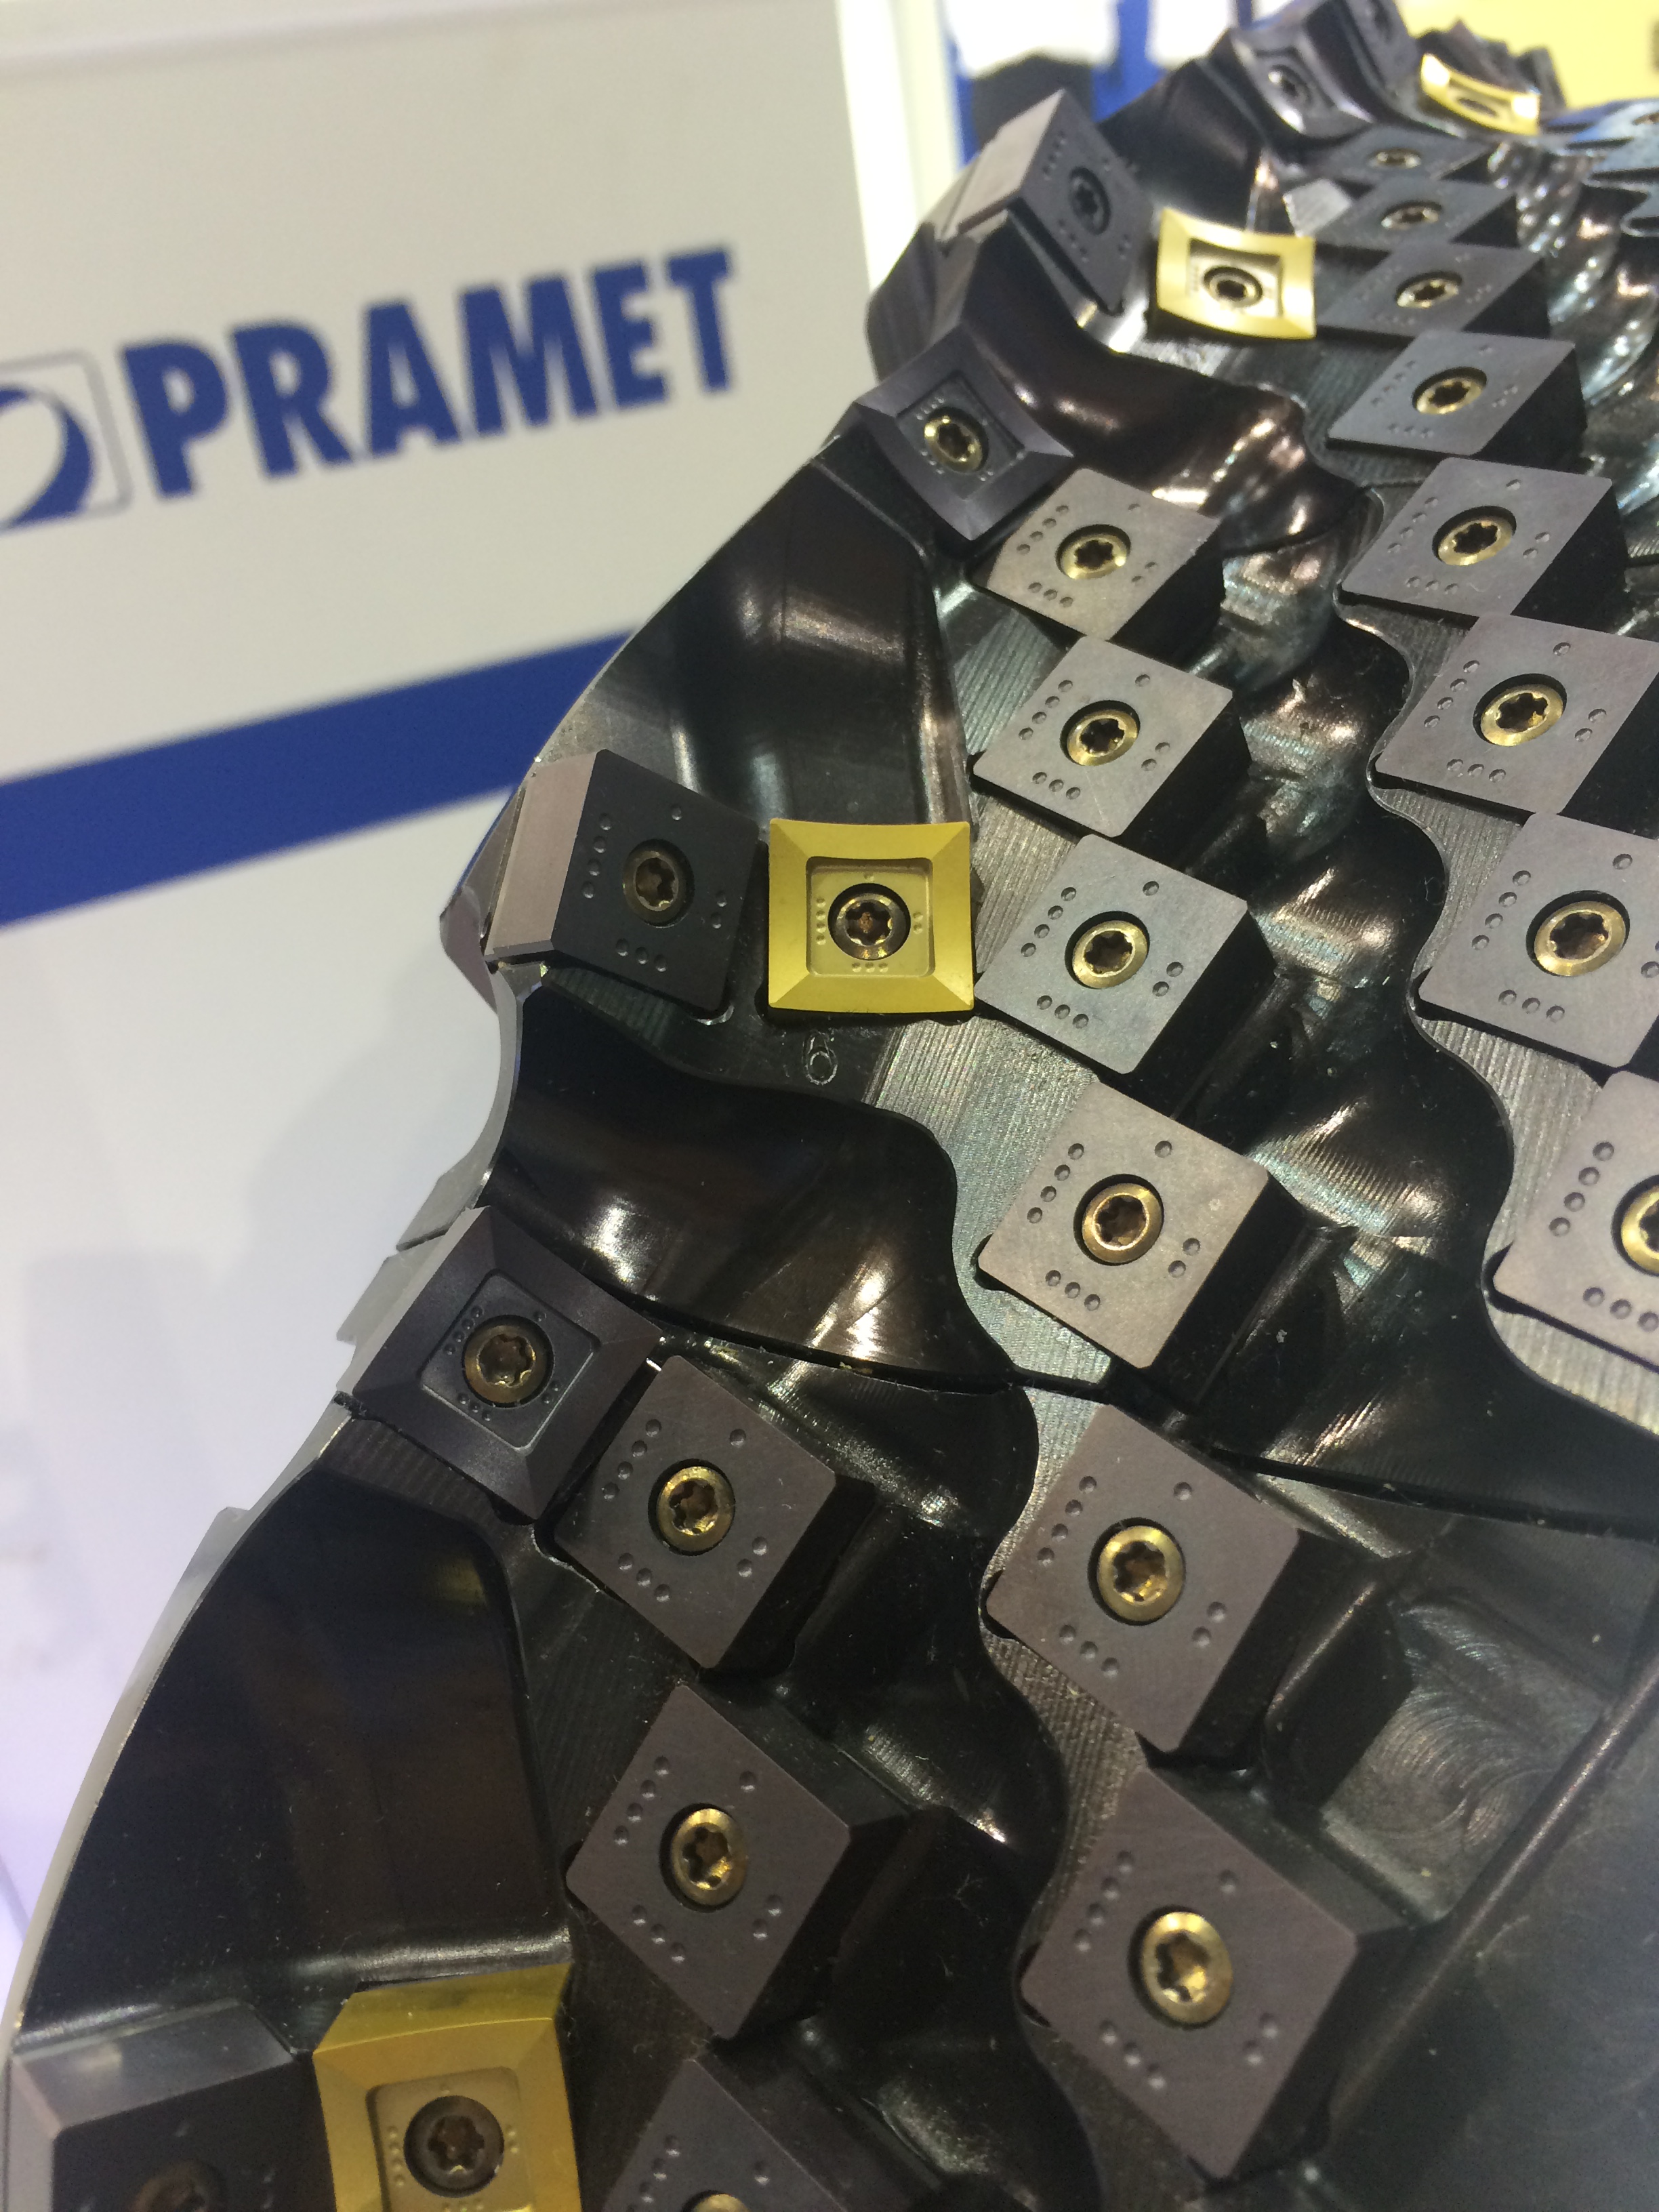 The Pramet dynamic rail milling cutter.